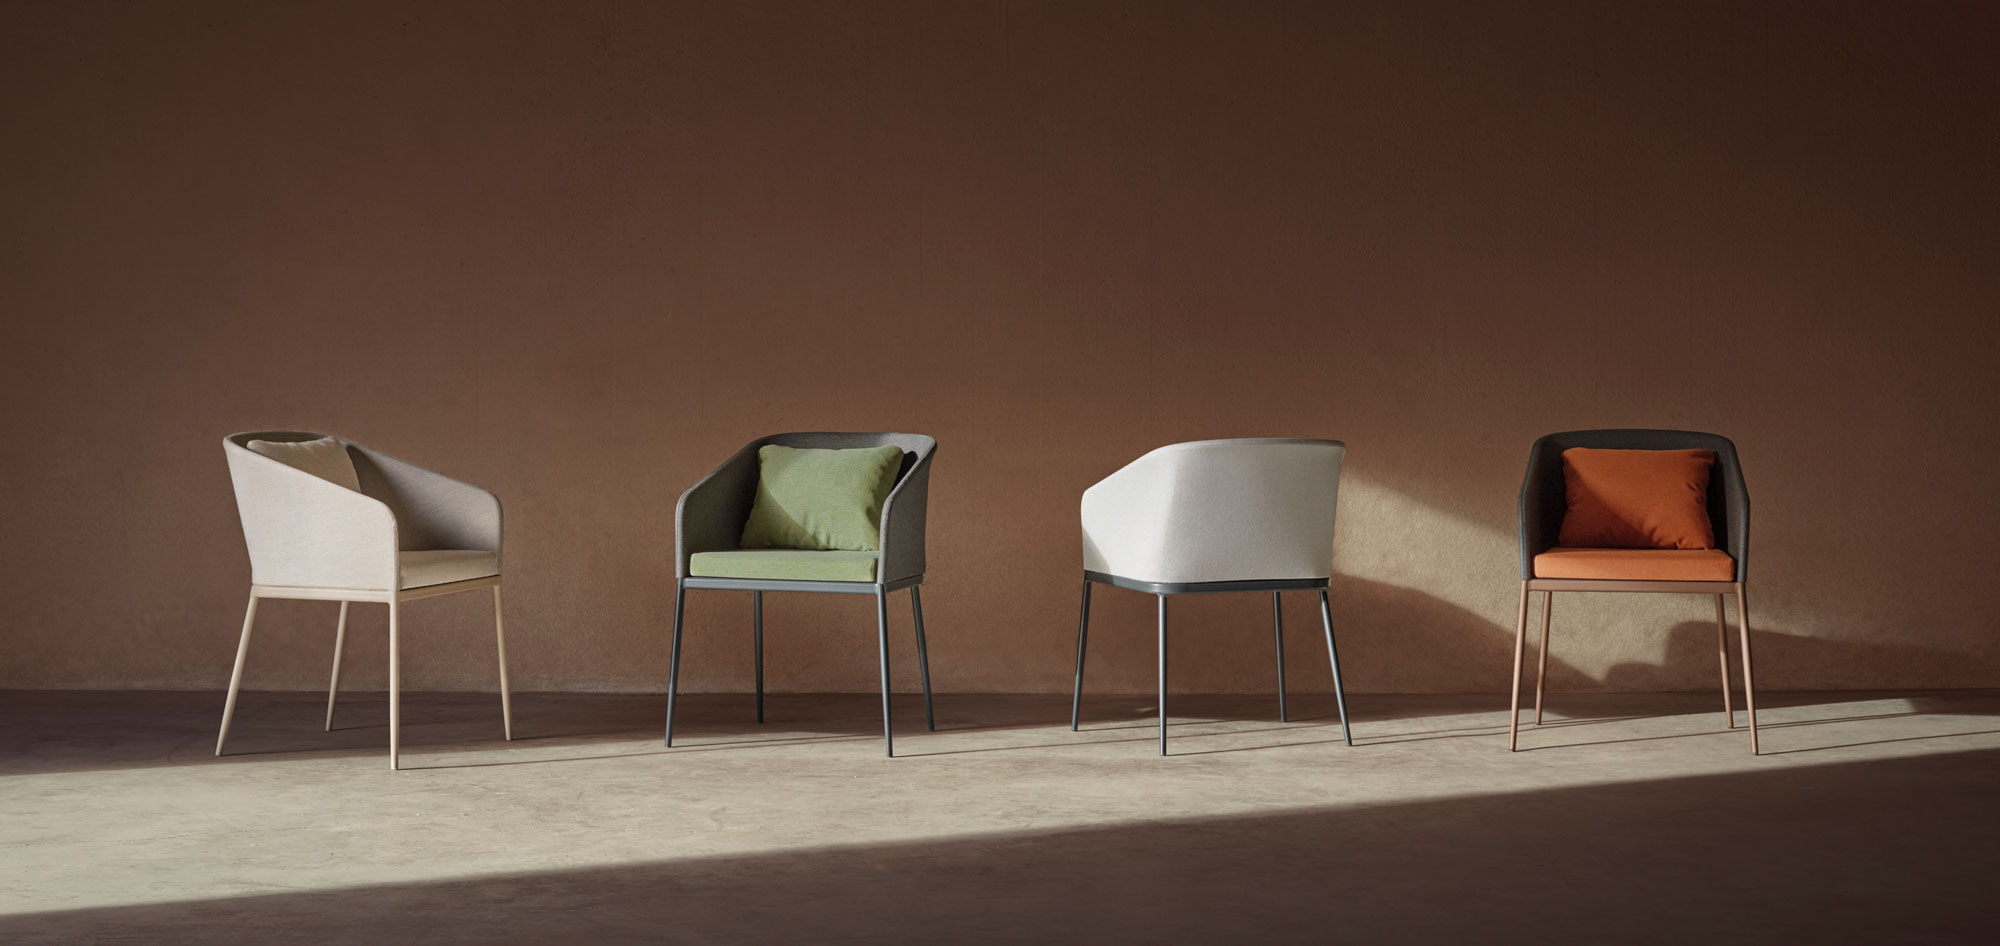 outdoor kollektion - möbelfamilie senso chairs